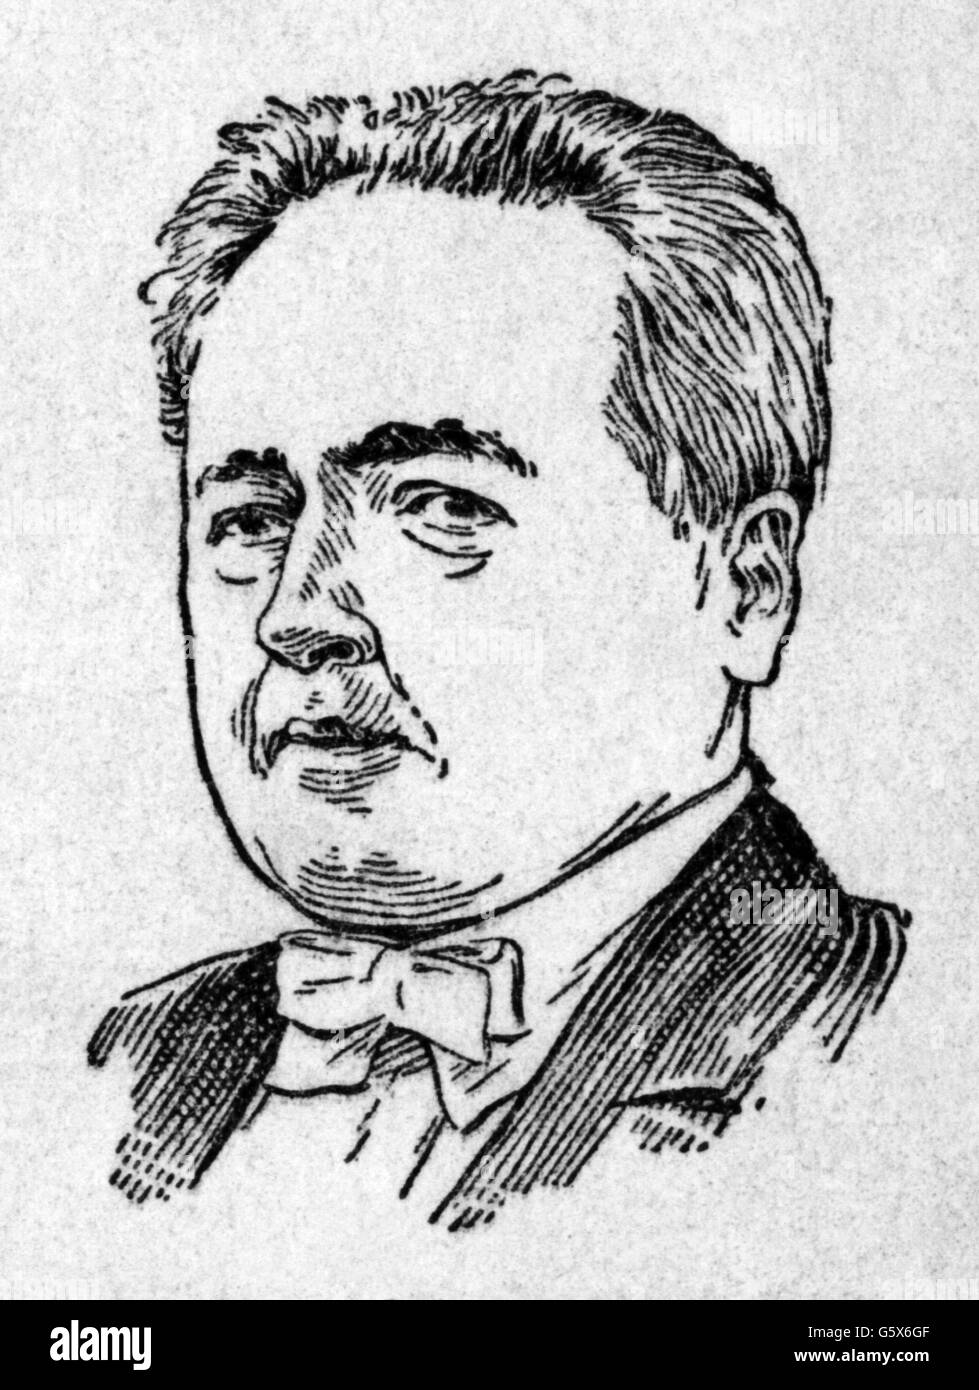 Gauk, Aleksandr Vasilyevich, 3.8. / 15.8.1893 - 30.3.1963, Ukrainian composer and conductor, portrait, drawing from a Soviet encyclopedia, mid 20th century, Stock Photo